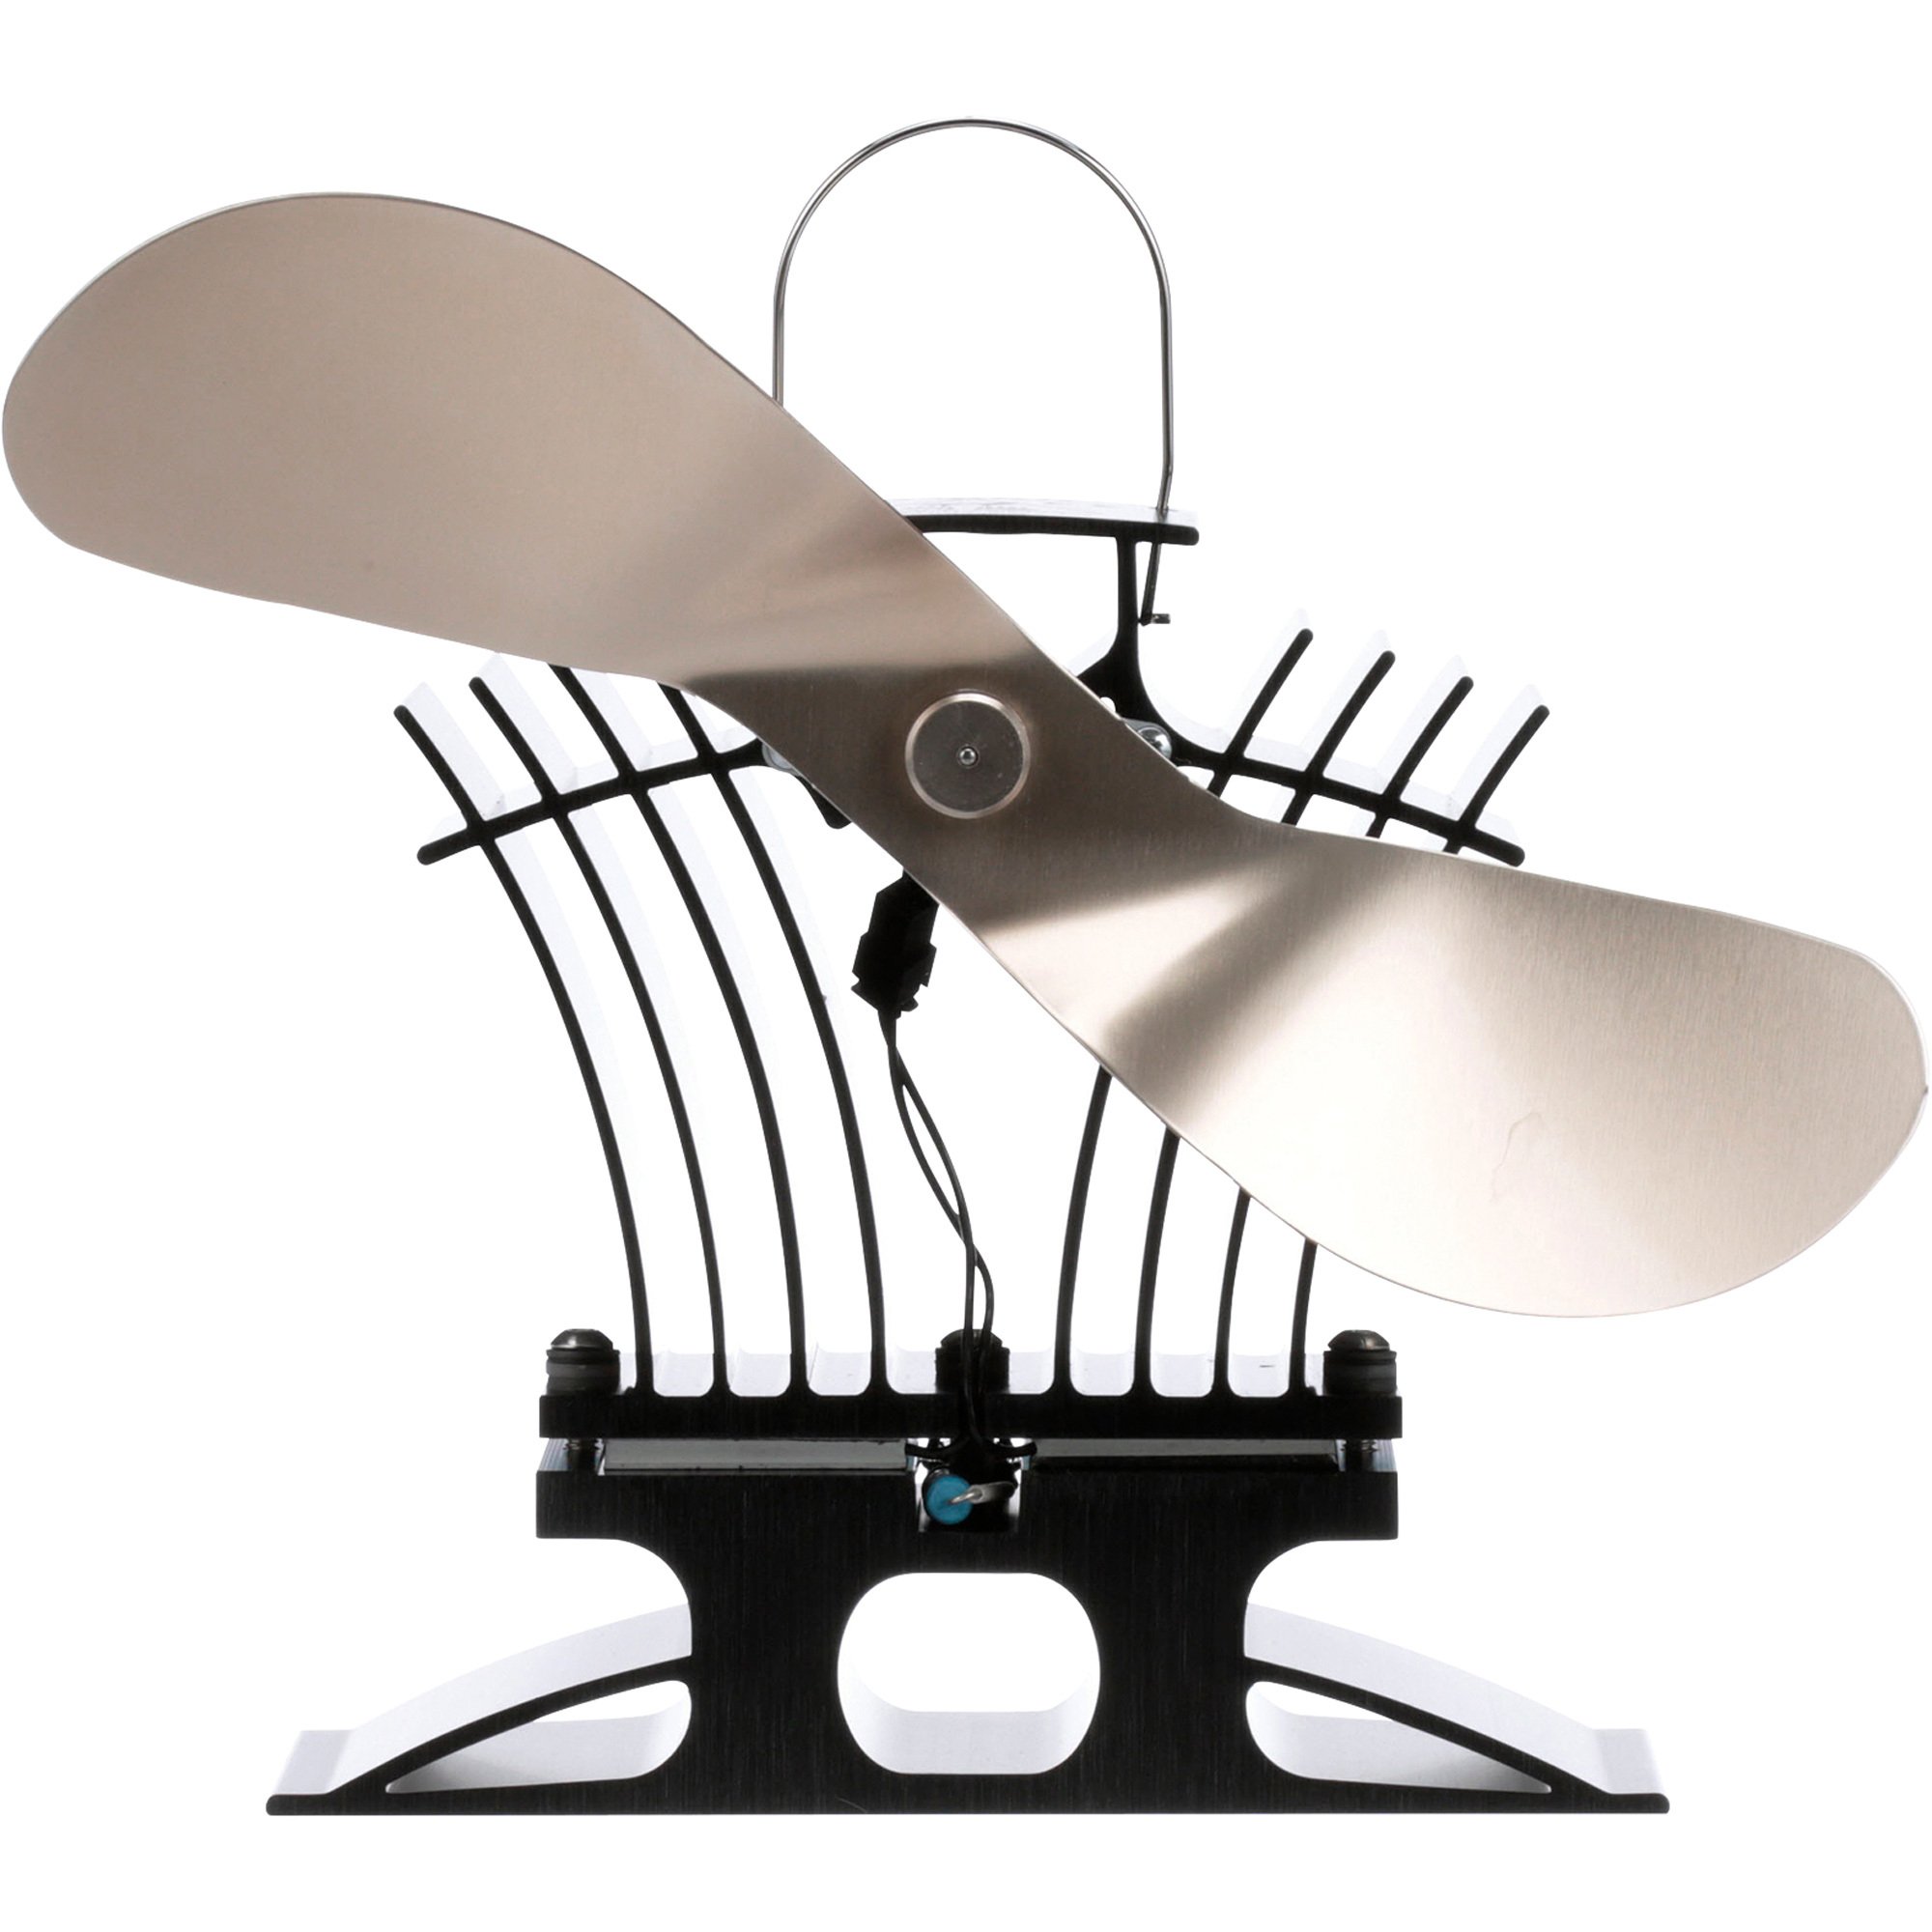 Ecofan BelAir Heat-Powered Stove Fan For Low Temp Stoves —140 CFM, Nickel,  Model# 806CAKBX